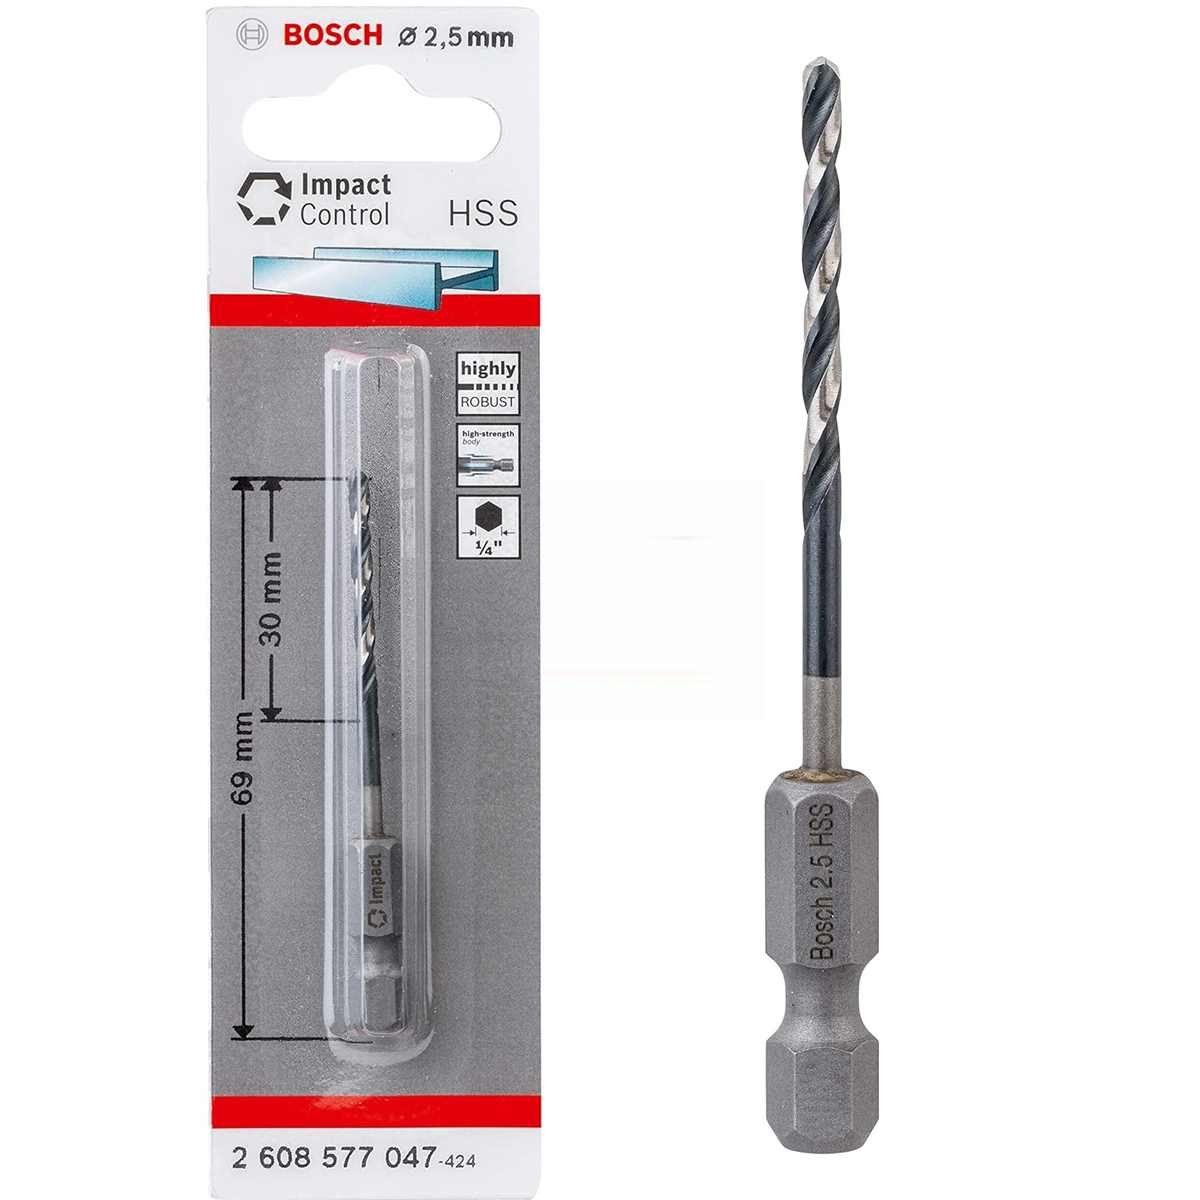 und Bitset Bohrer- Bosch mm CONTROL Metall Bohrer IMACT Professionel BOSCH Hex HSS 1/4 2,5